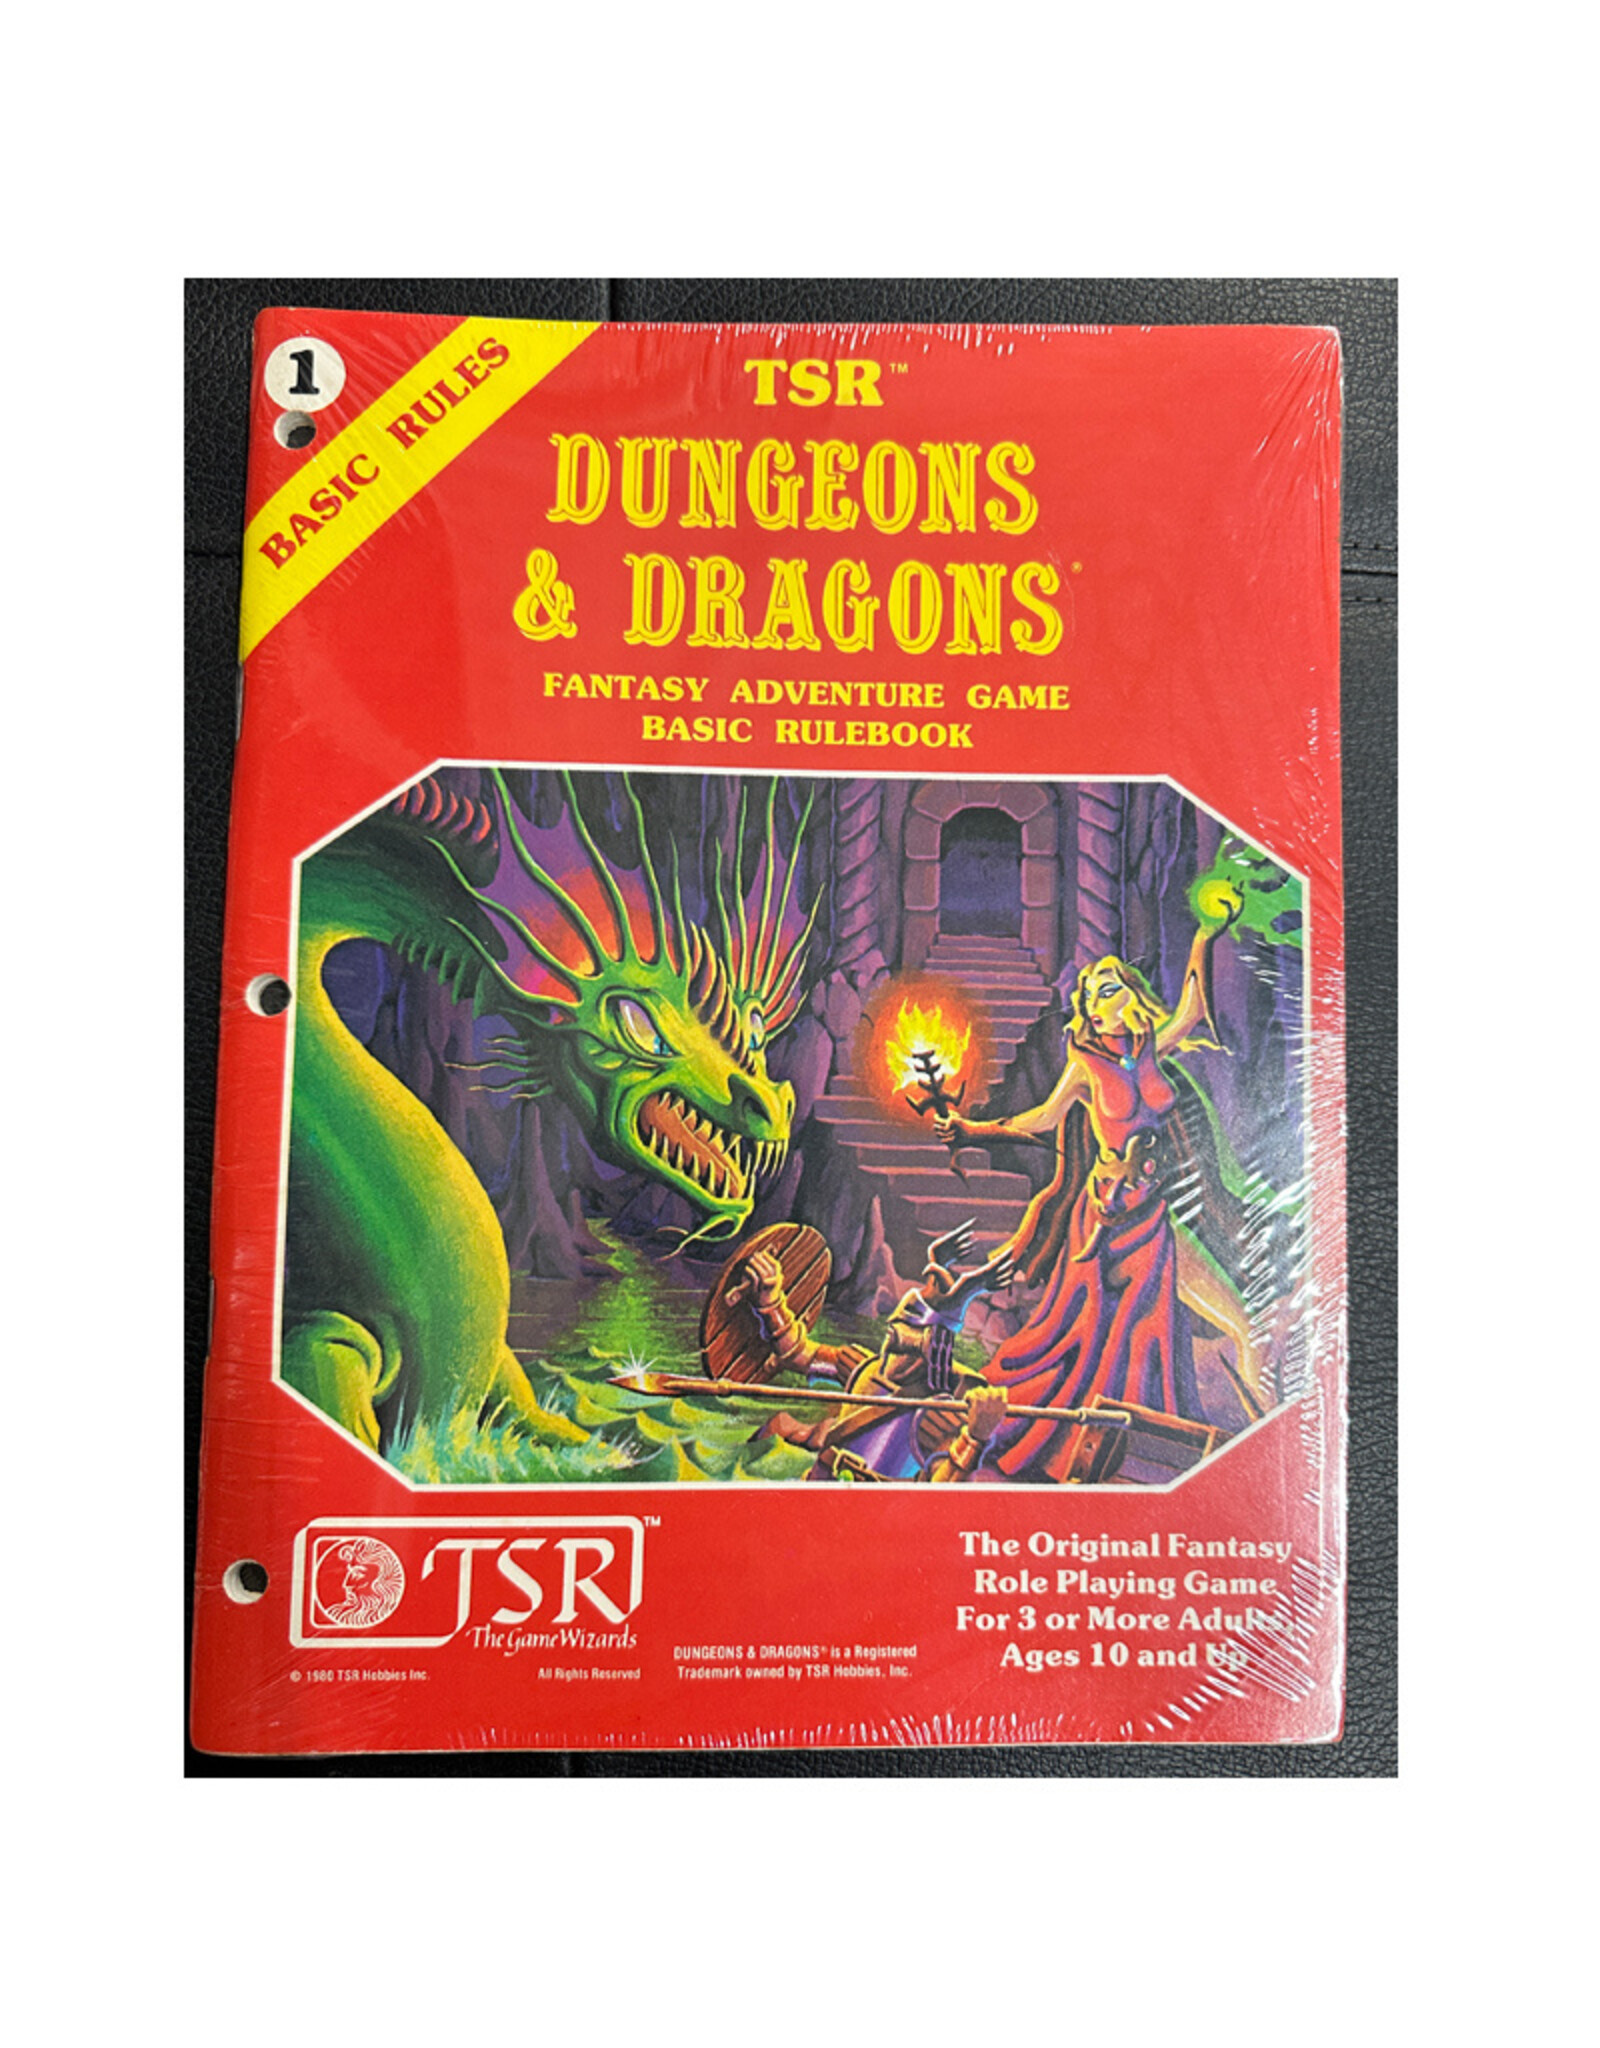 TSR Dungeons & Dragons Fantasy Adventure Game: Basic Rulebook #1 (1980)